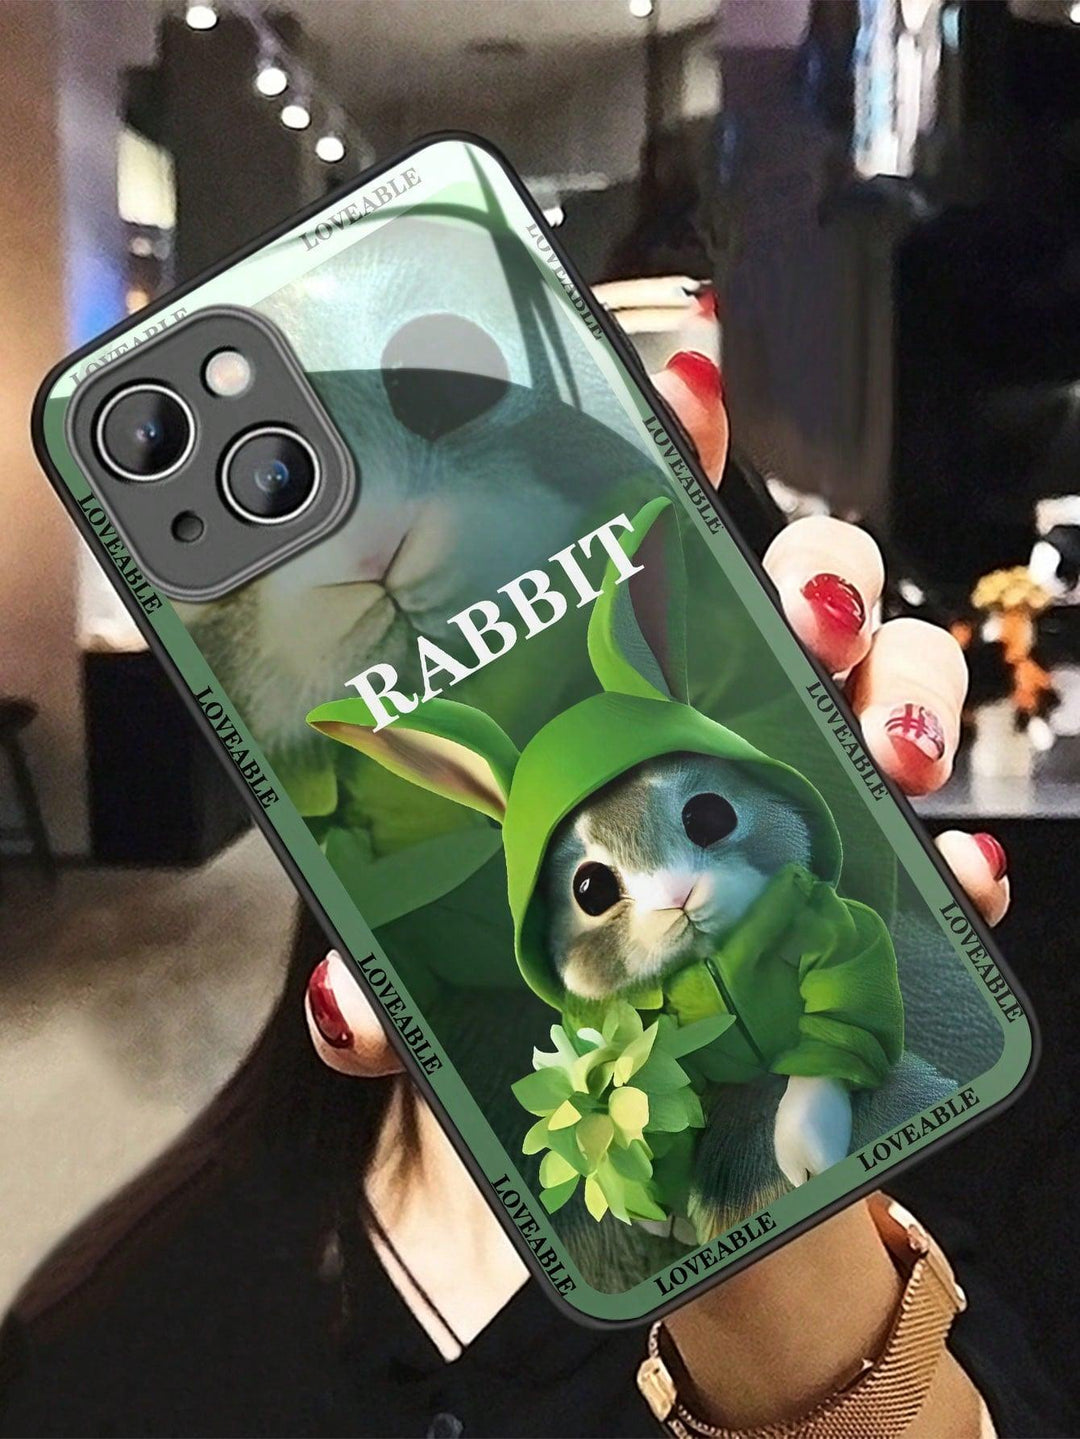 Cartoon Rabbit Pattern Phone Case - Brand My Case